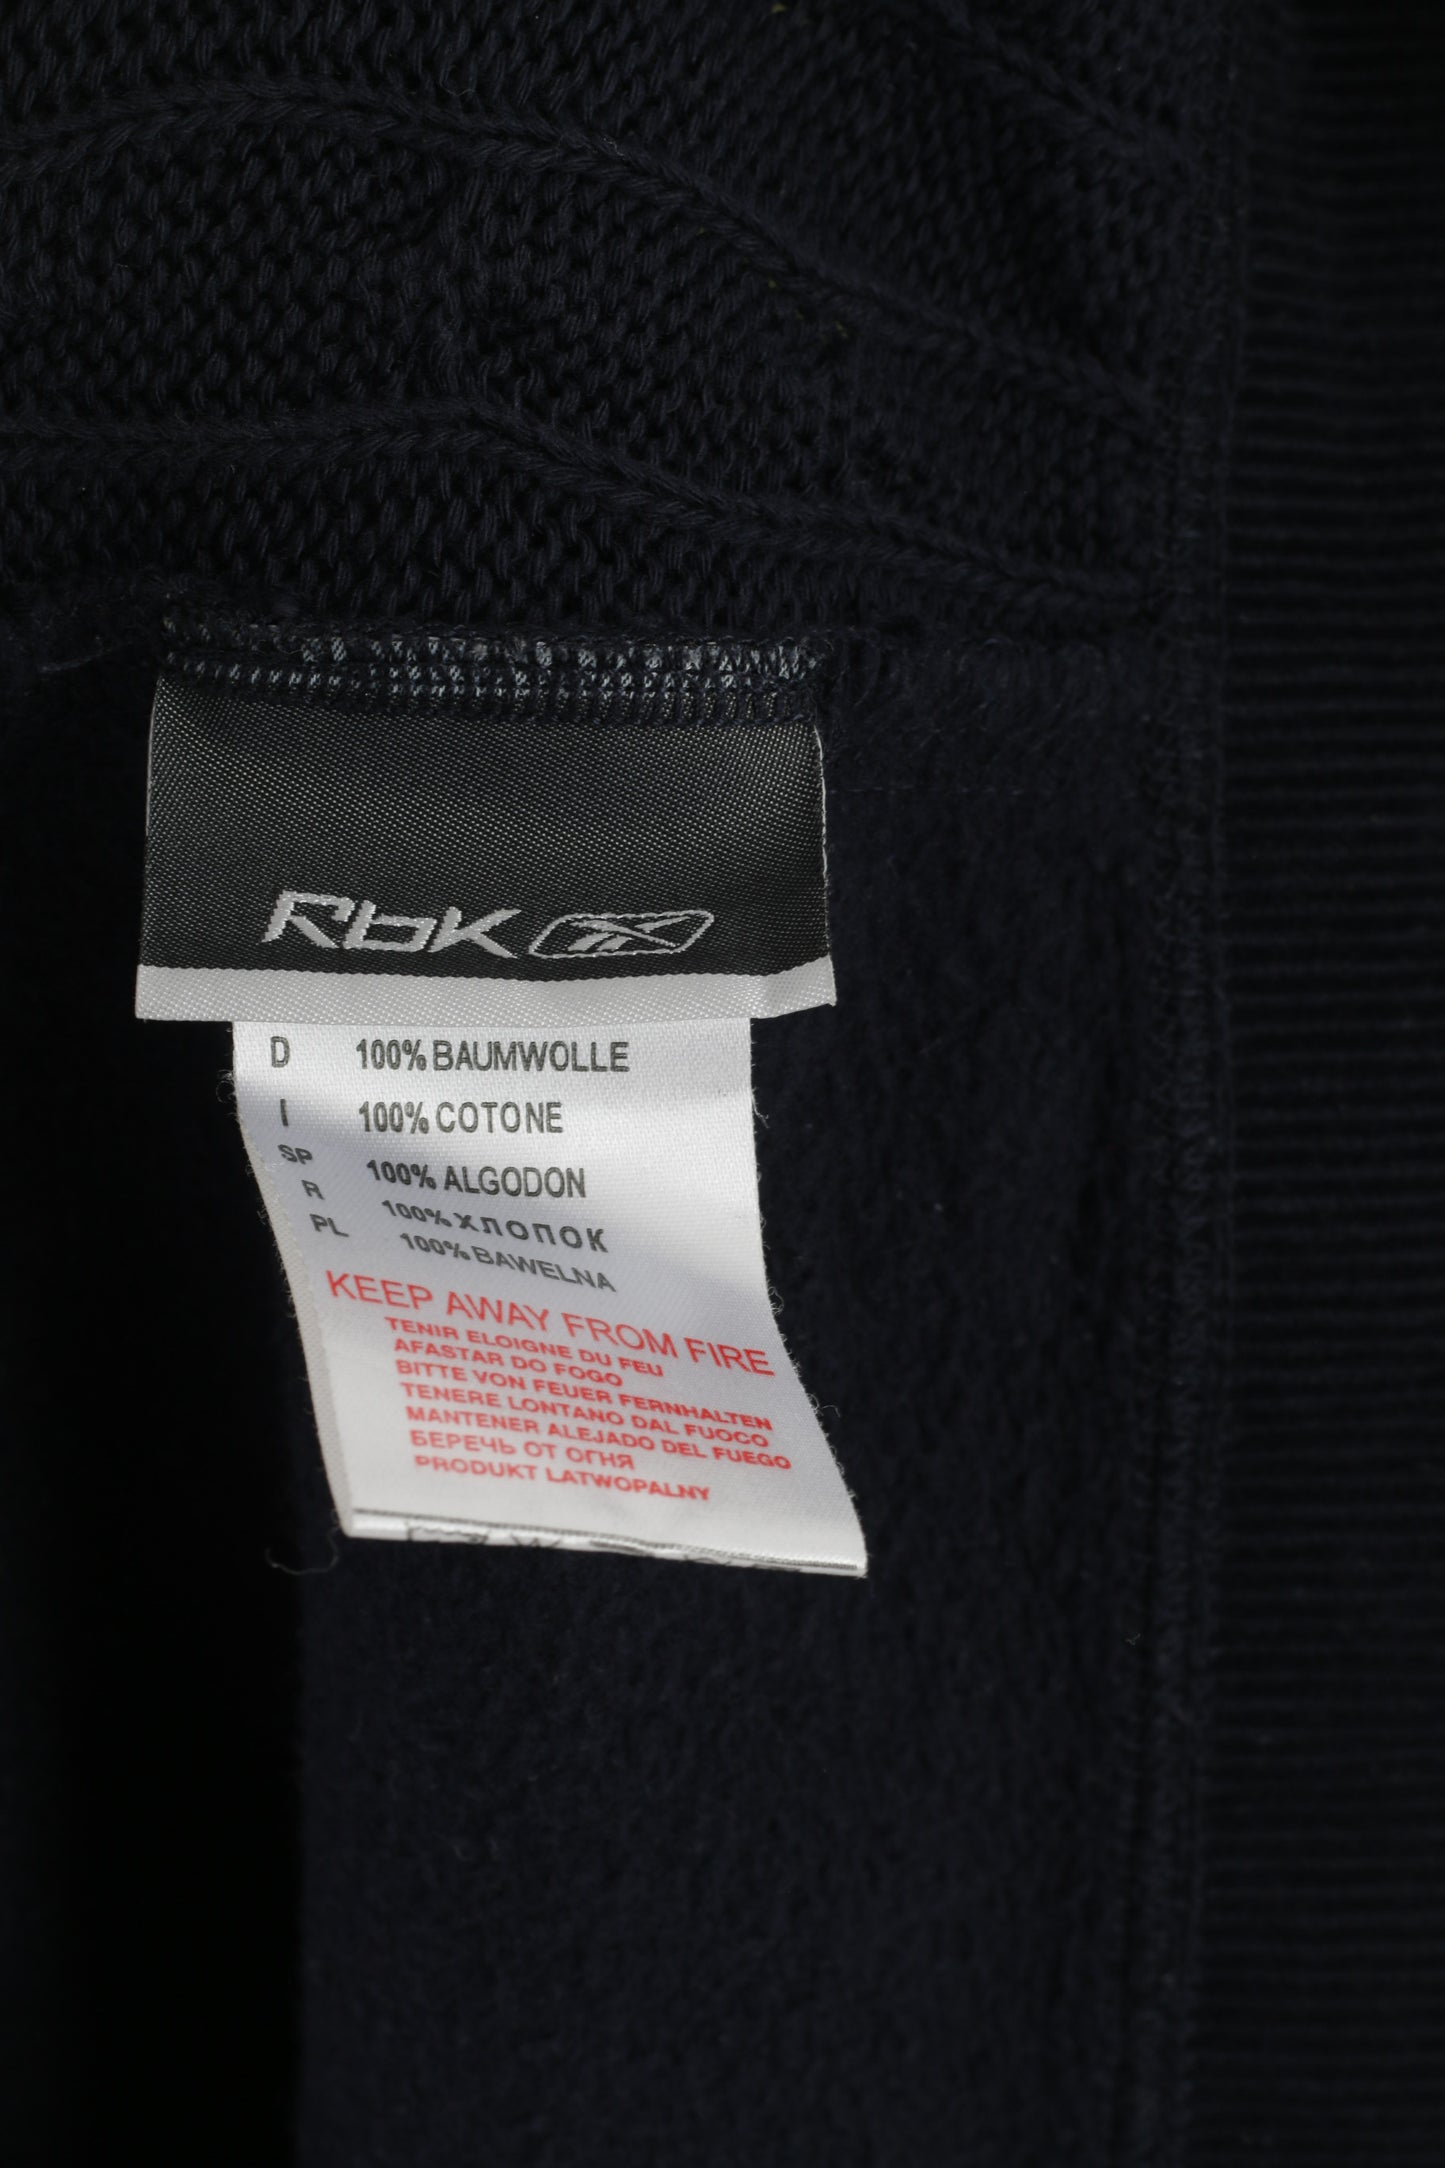 Reebok Men M Sweatshirt Navy Blue Cotton Full Zipper Emroidered Top